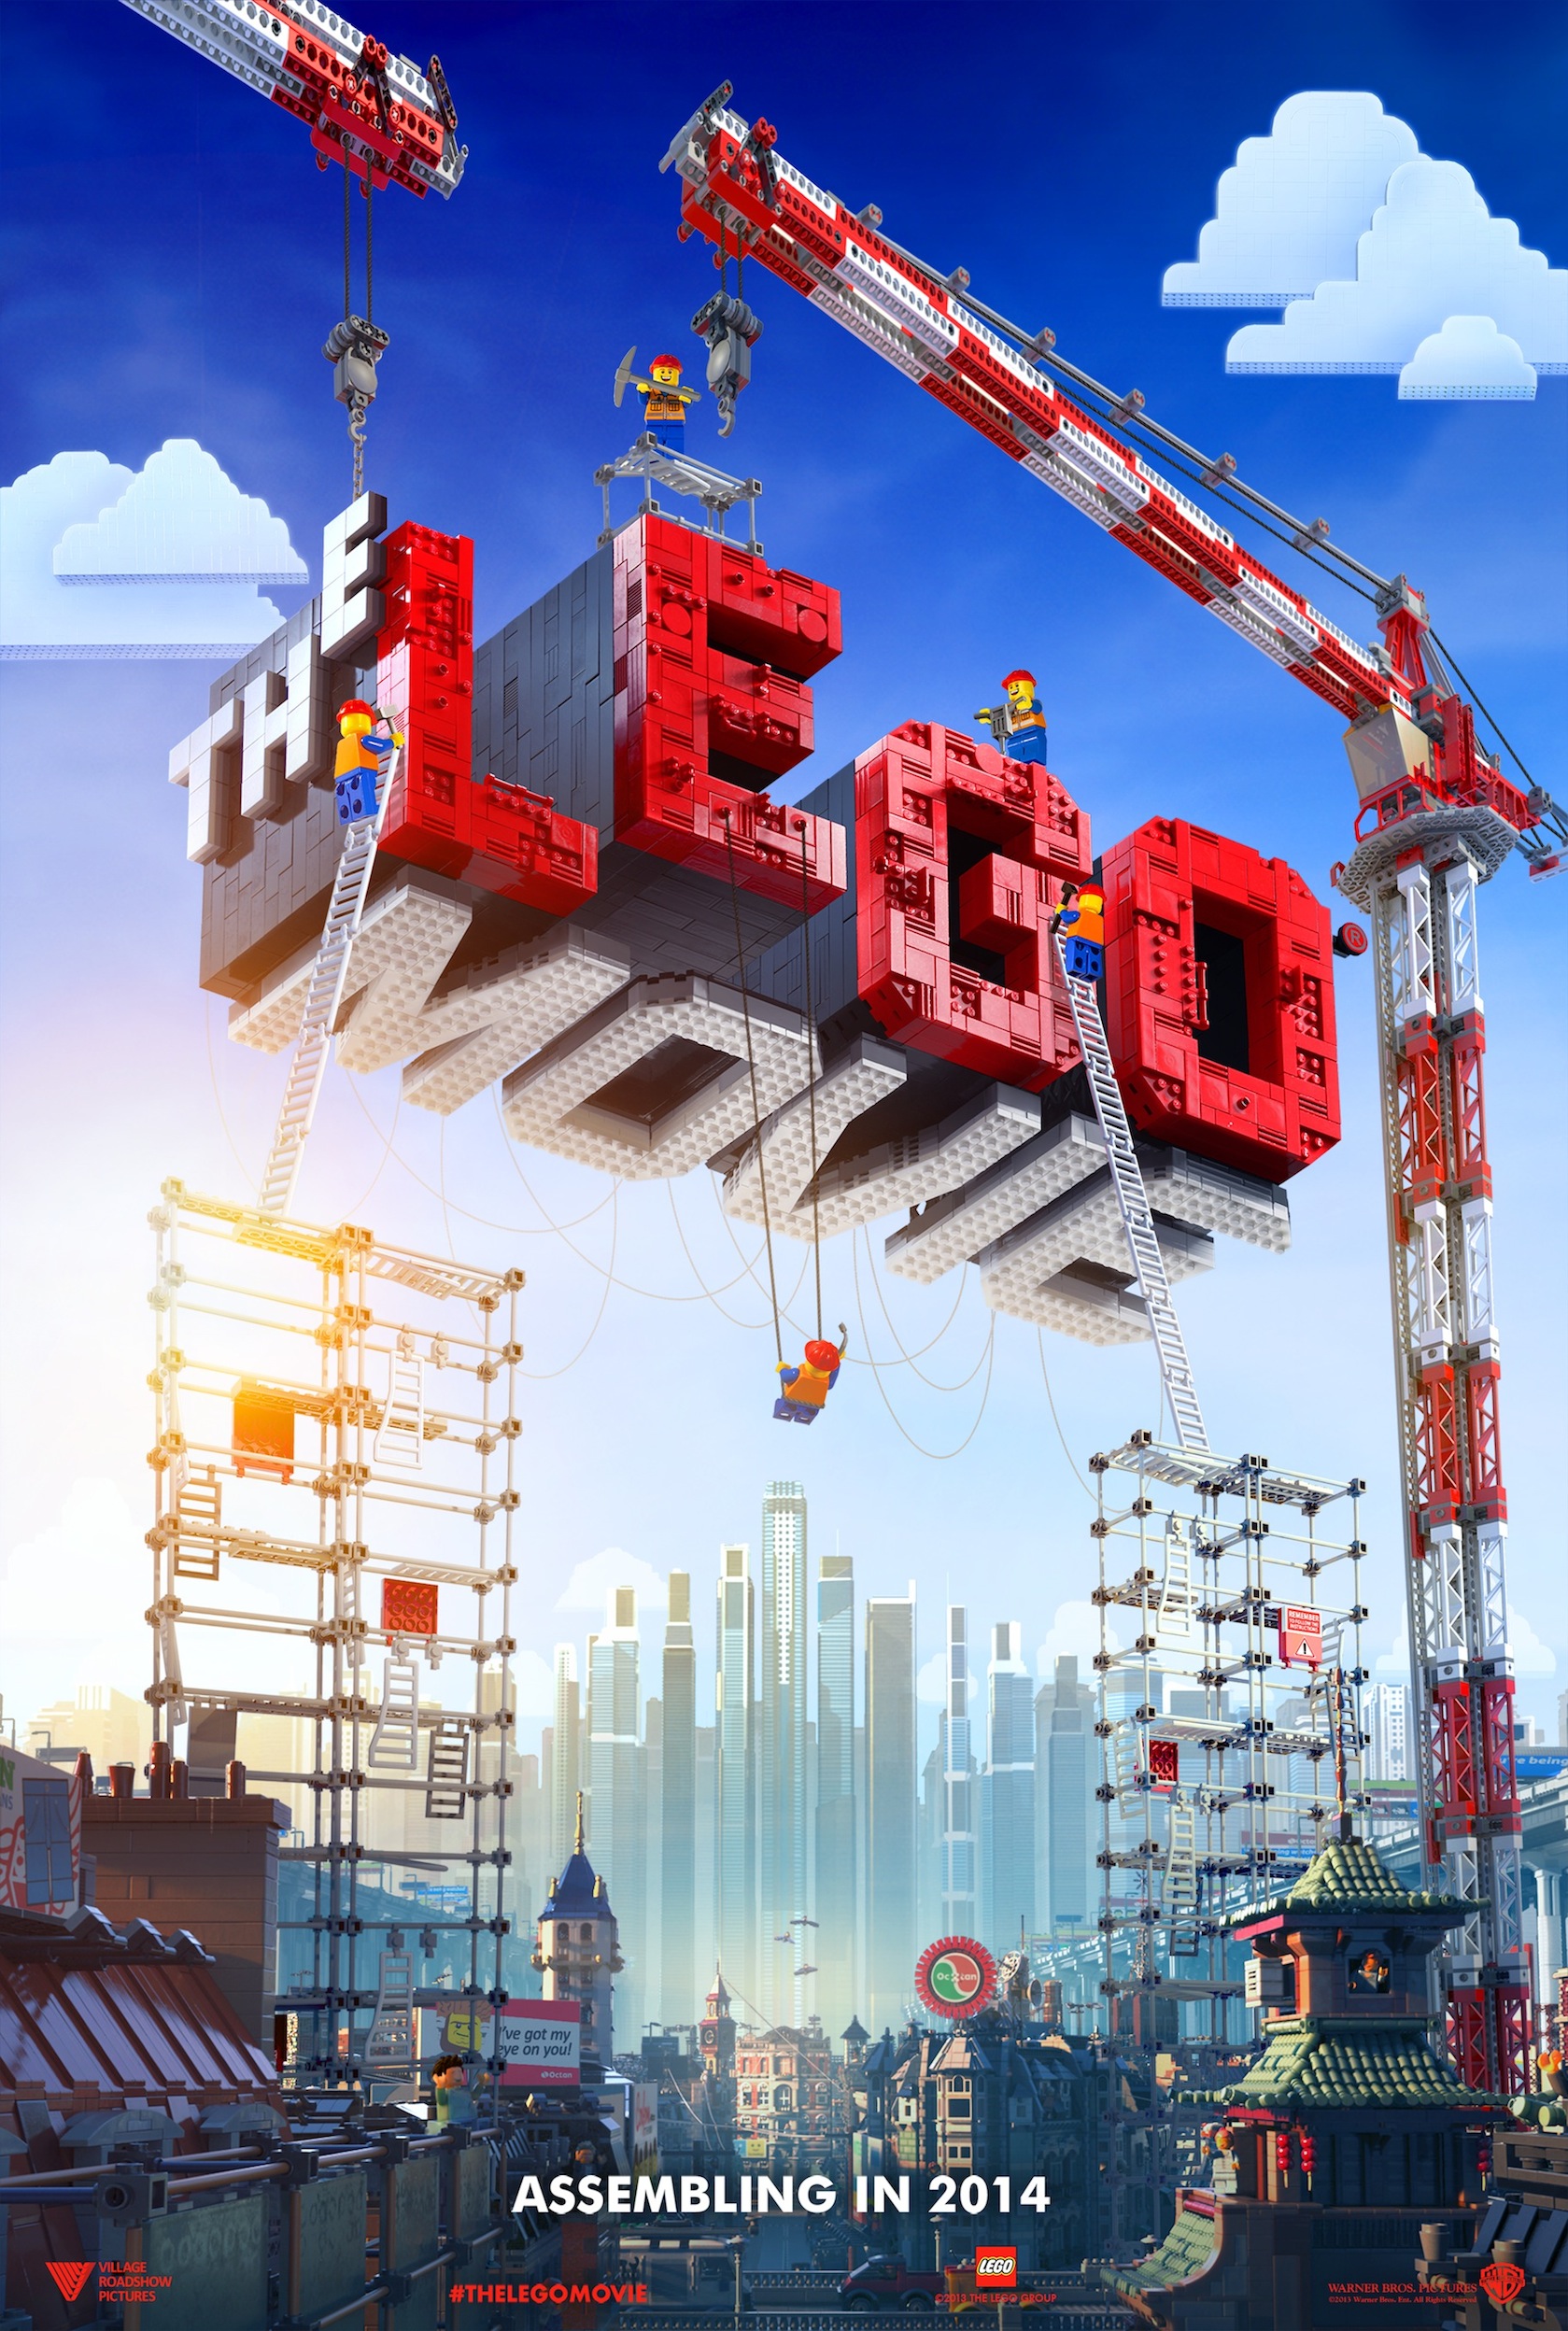 THE LEGO MOVIE teaser image